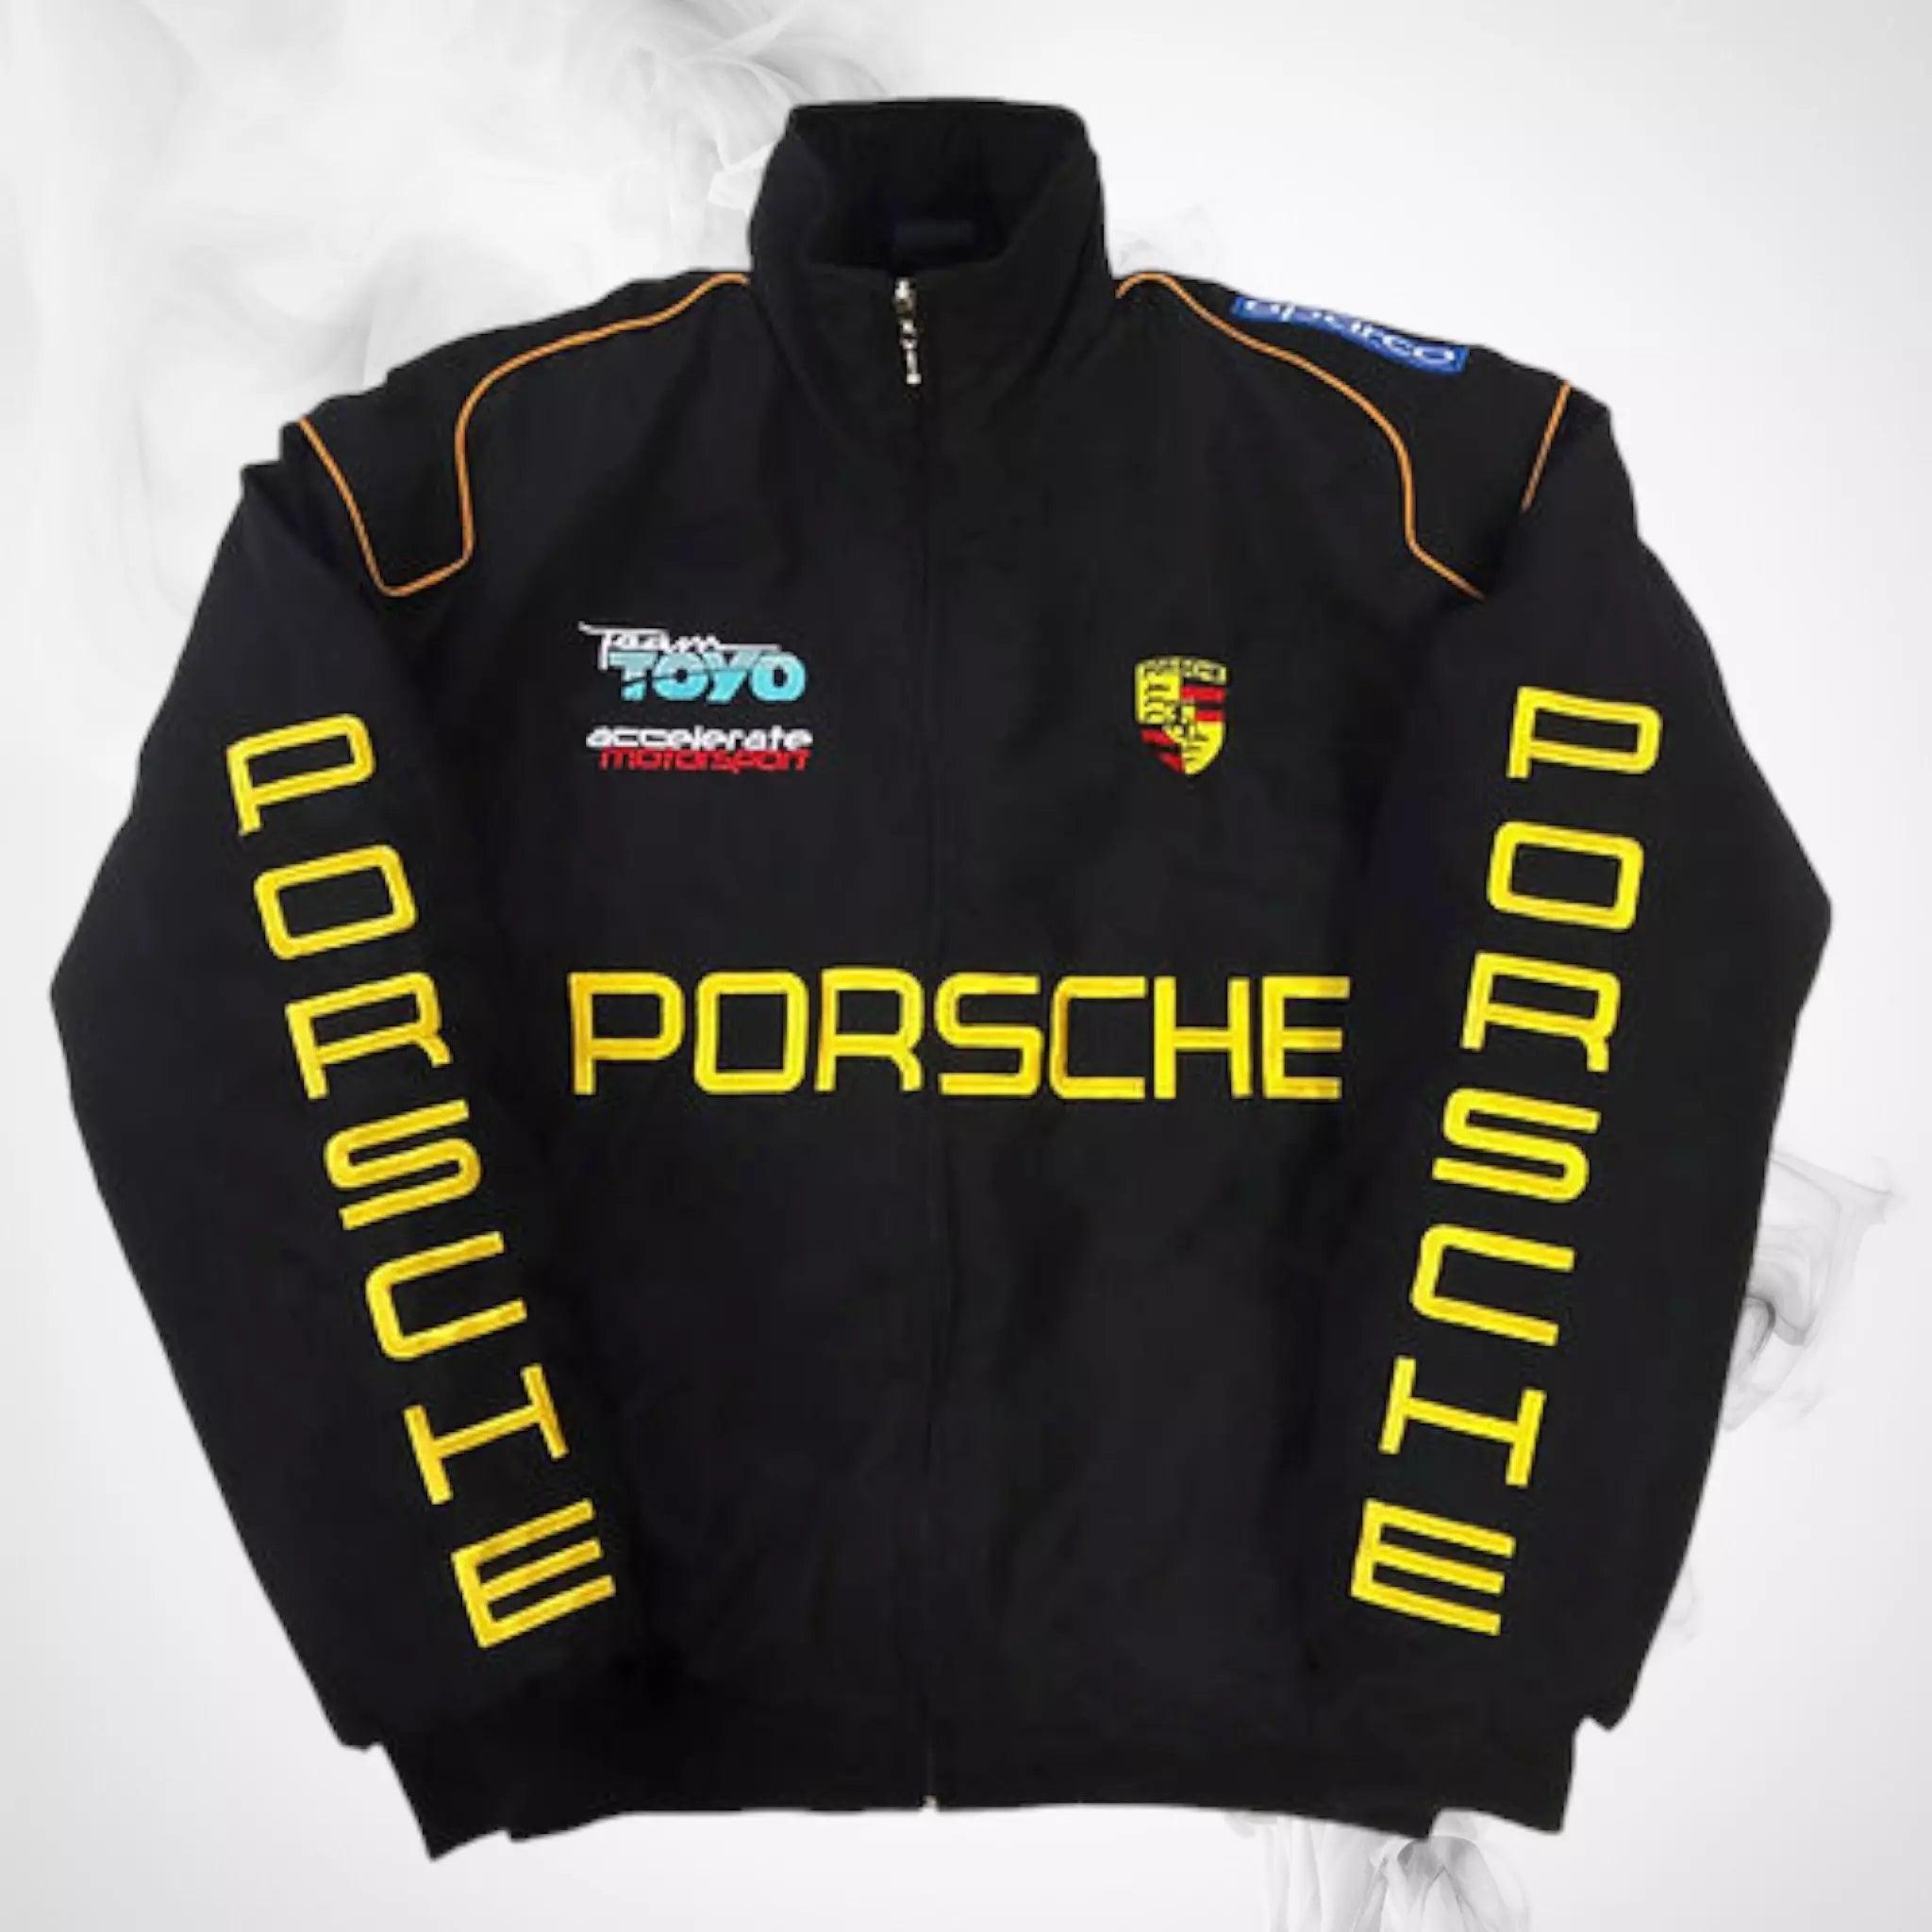 Porsche Vintage Jacket - Dash Racegear 